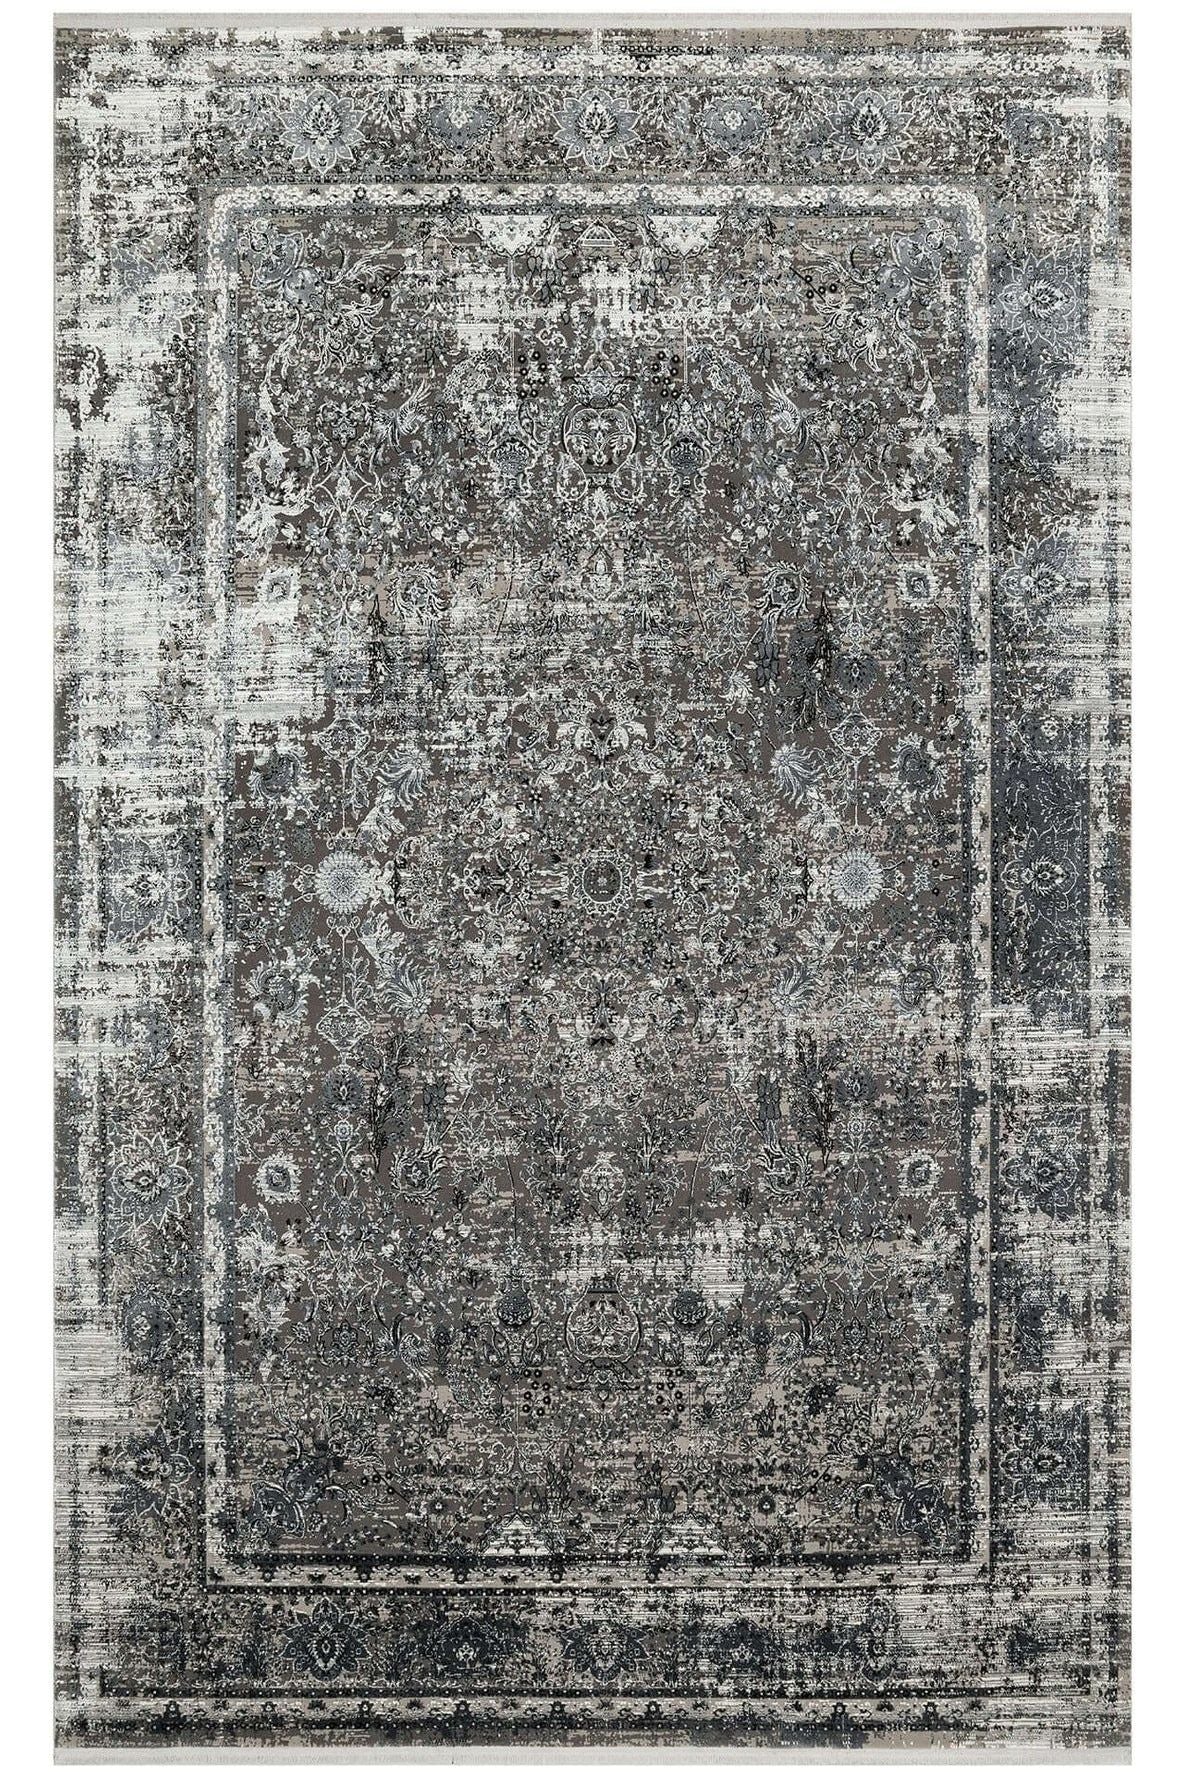 #Turkish_Carpets_Rugs# #Modern_Carpets# #Abrash_Carpets#Fs 29 Grey Black Xw